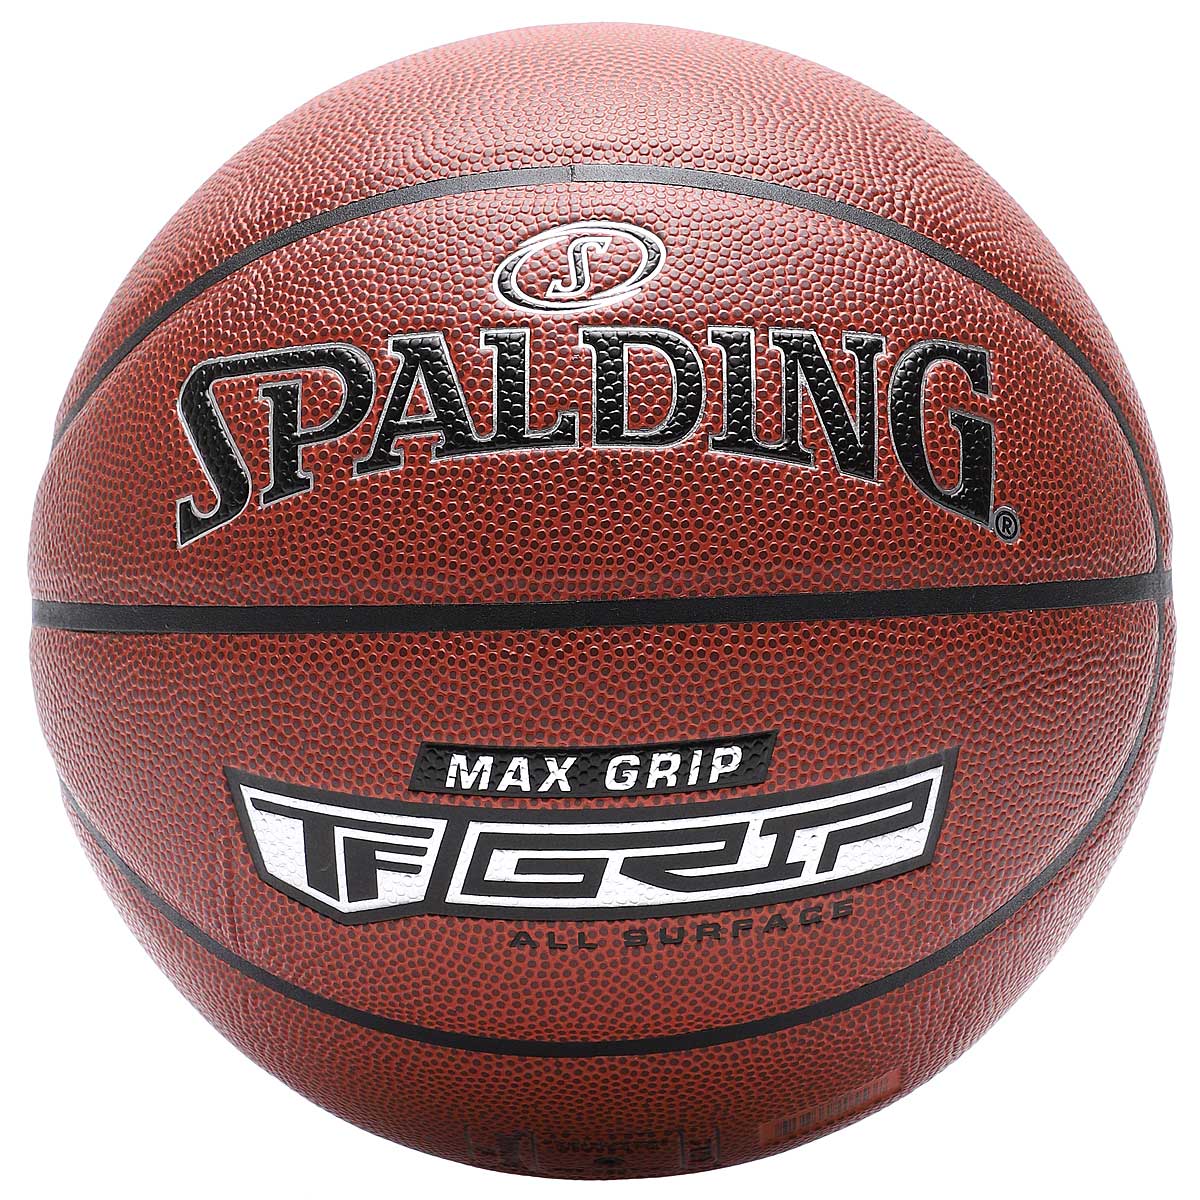 Image of Spalding Max Grip Sz7 Composite Basketball, Orange